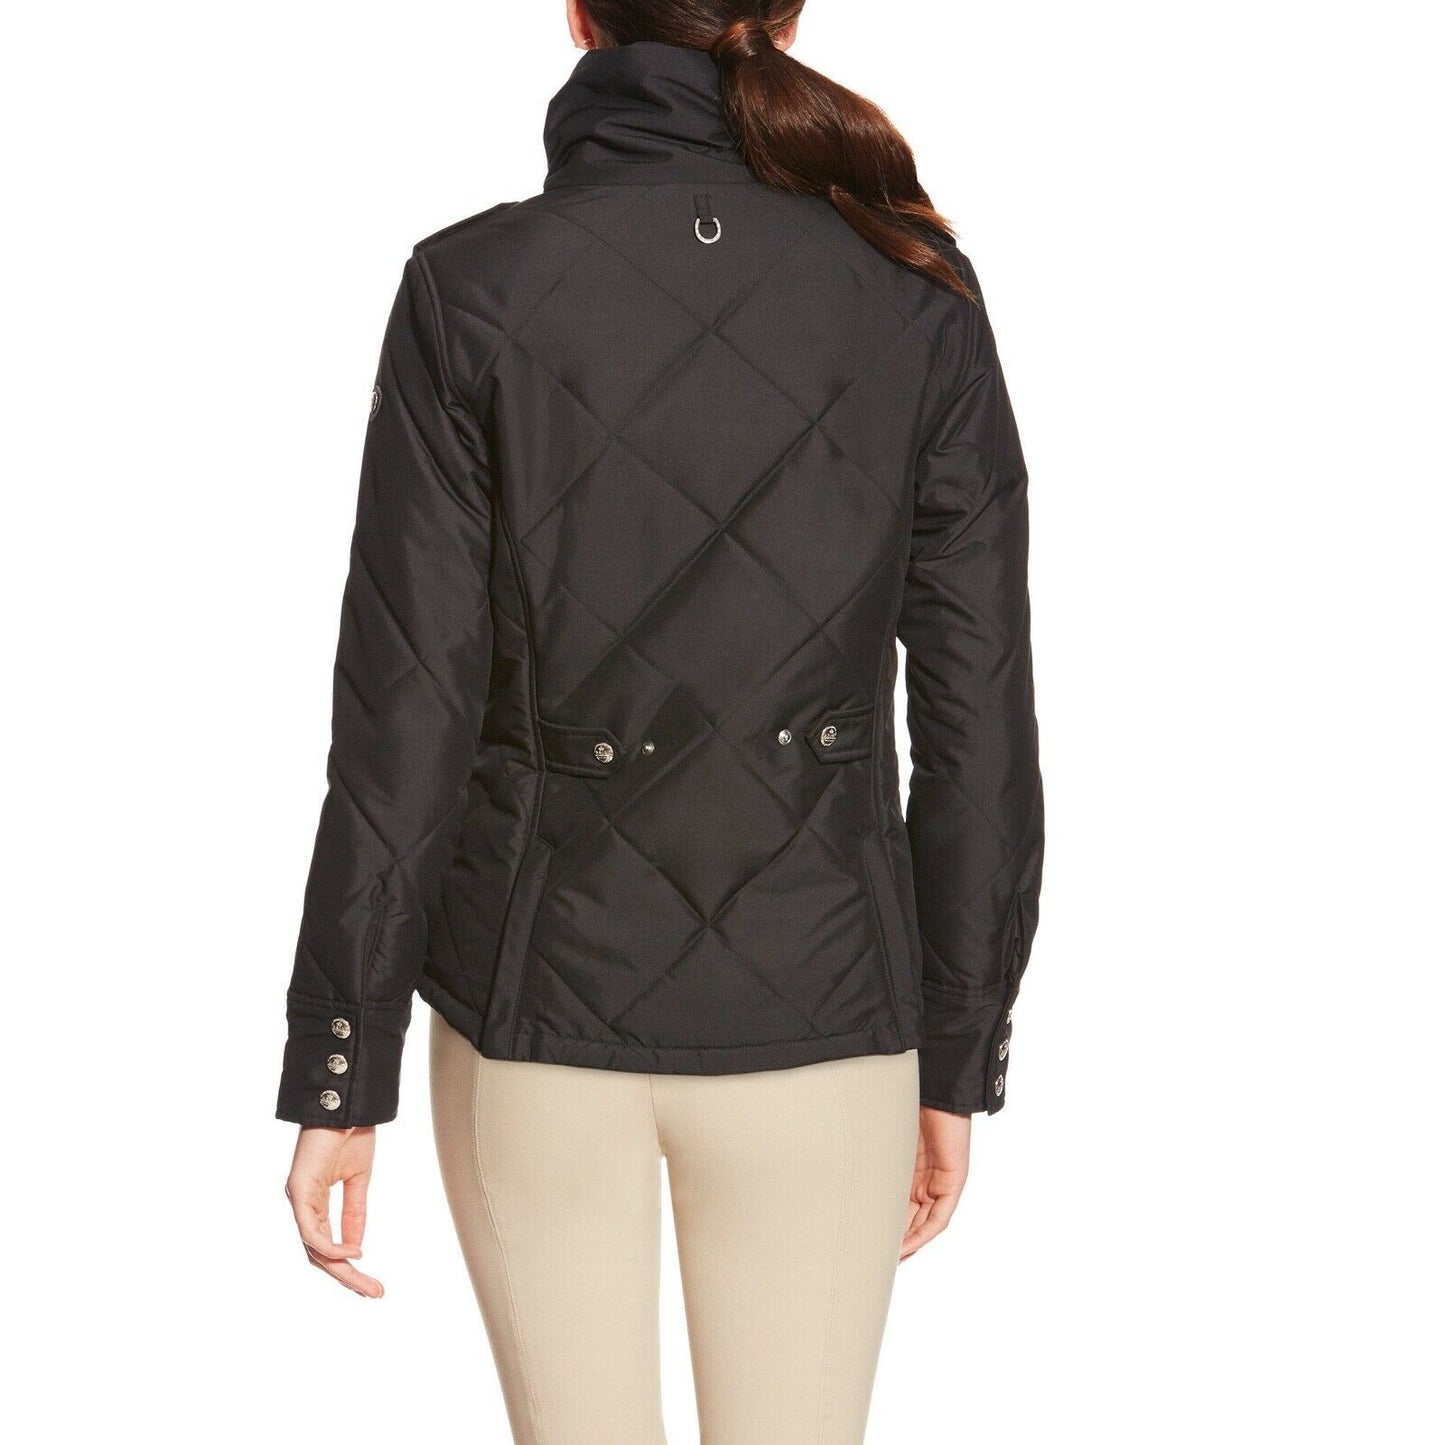 Ariat Ladies Terrace Black Insulated Weatherproof Jacket 10017815